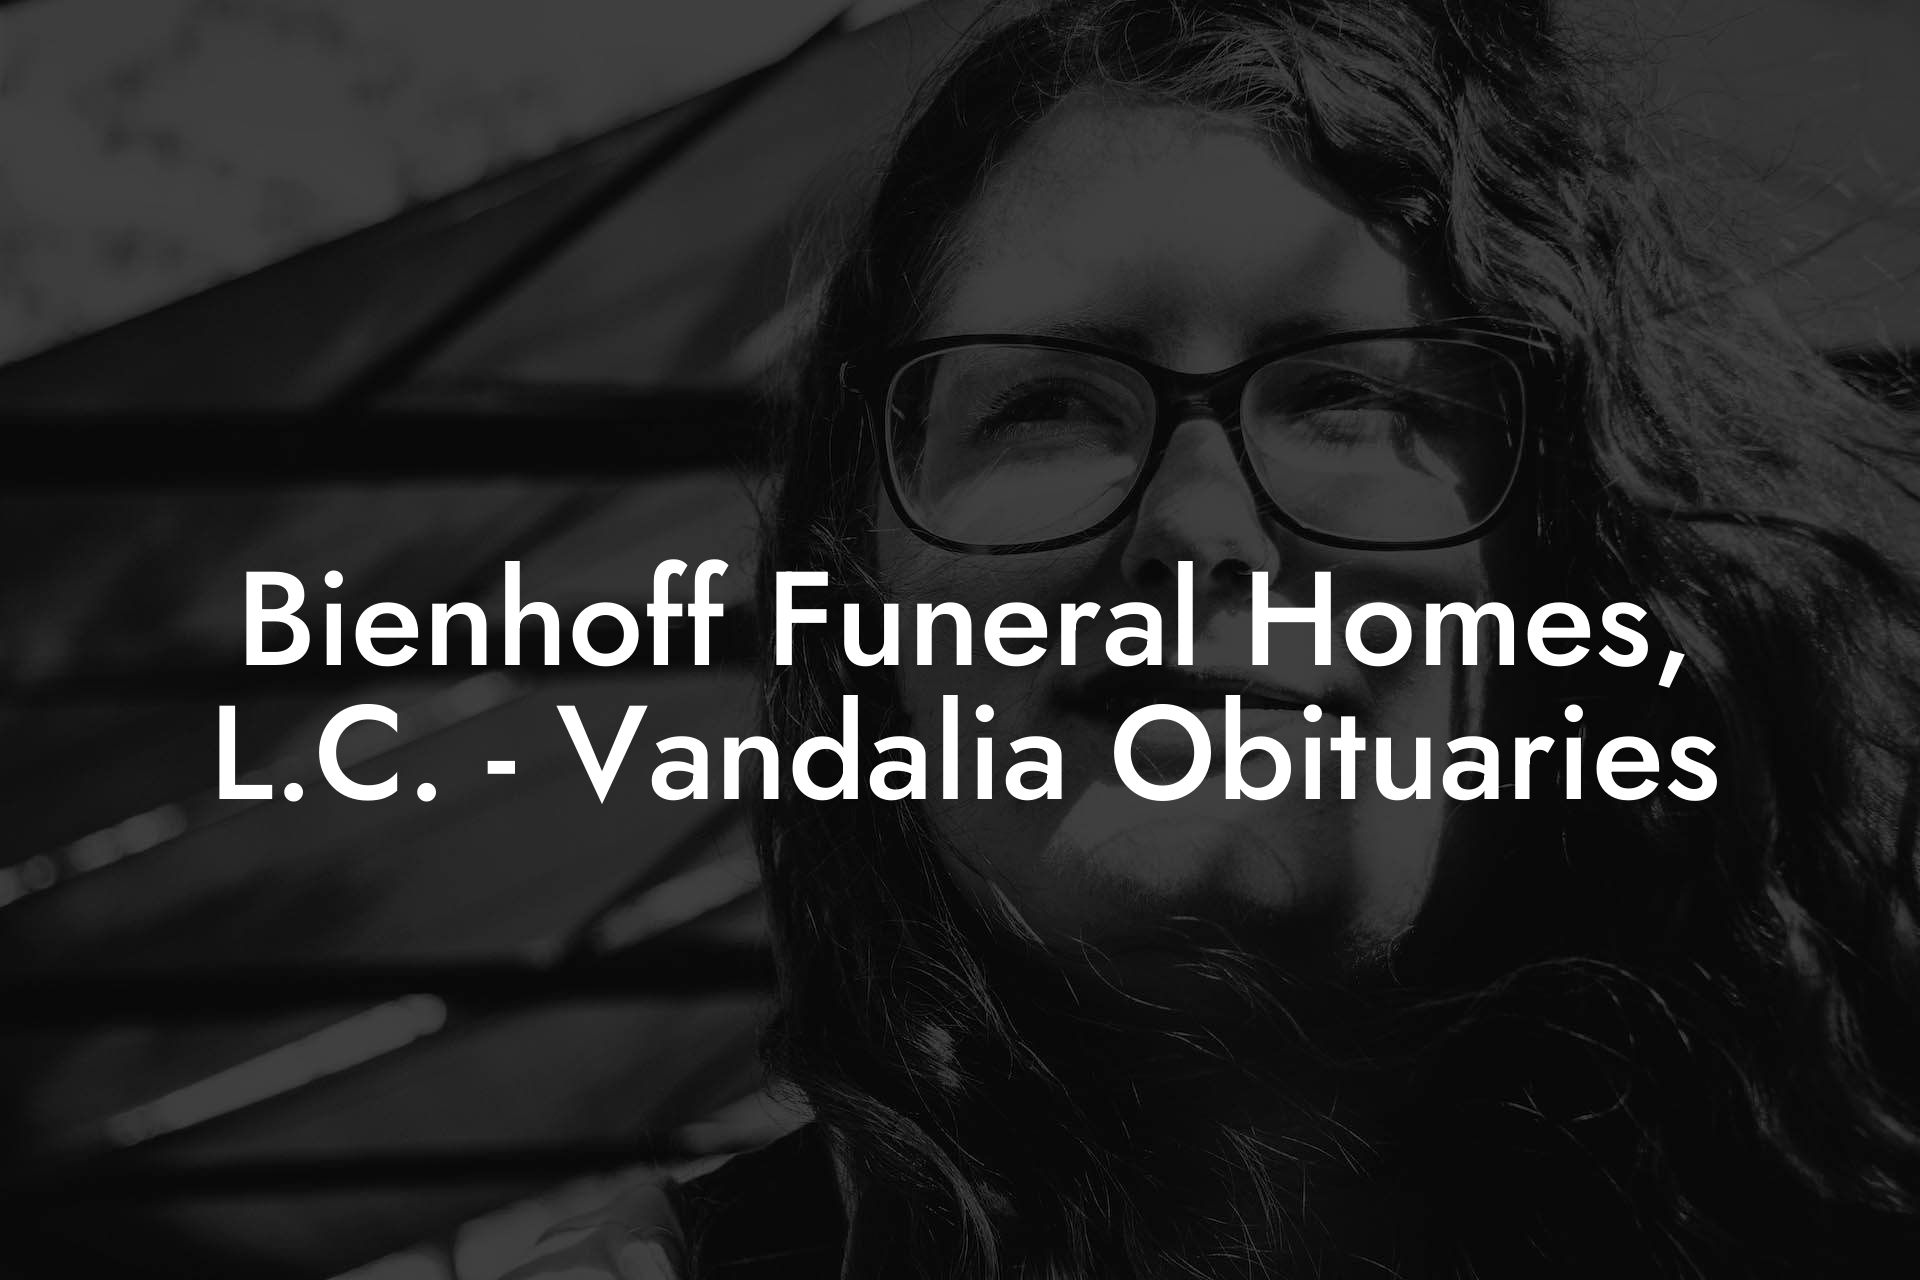 Bienhoff Funeral Homes, L.C. - Vandalia Obituaries